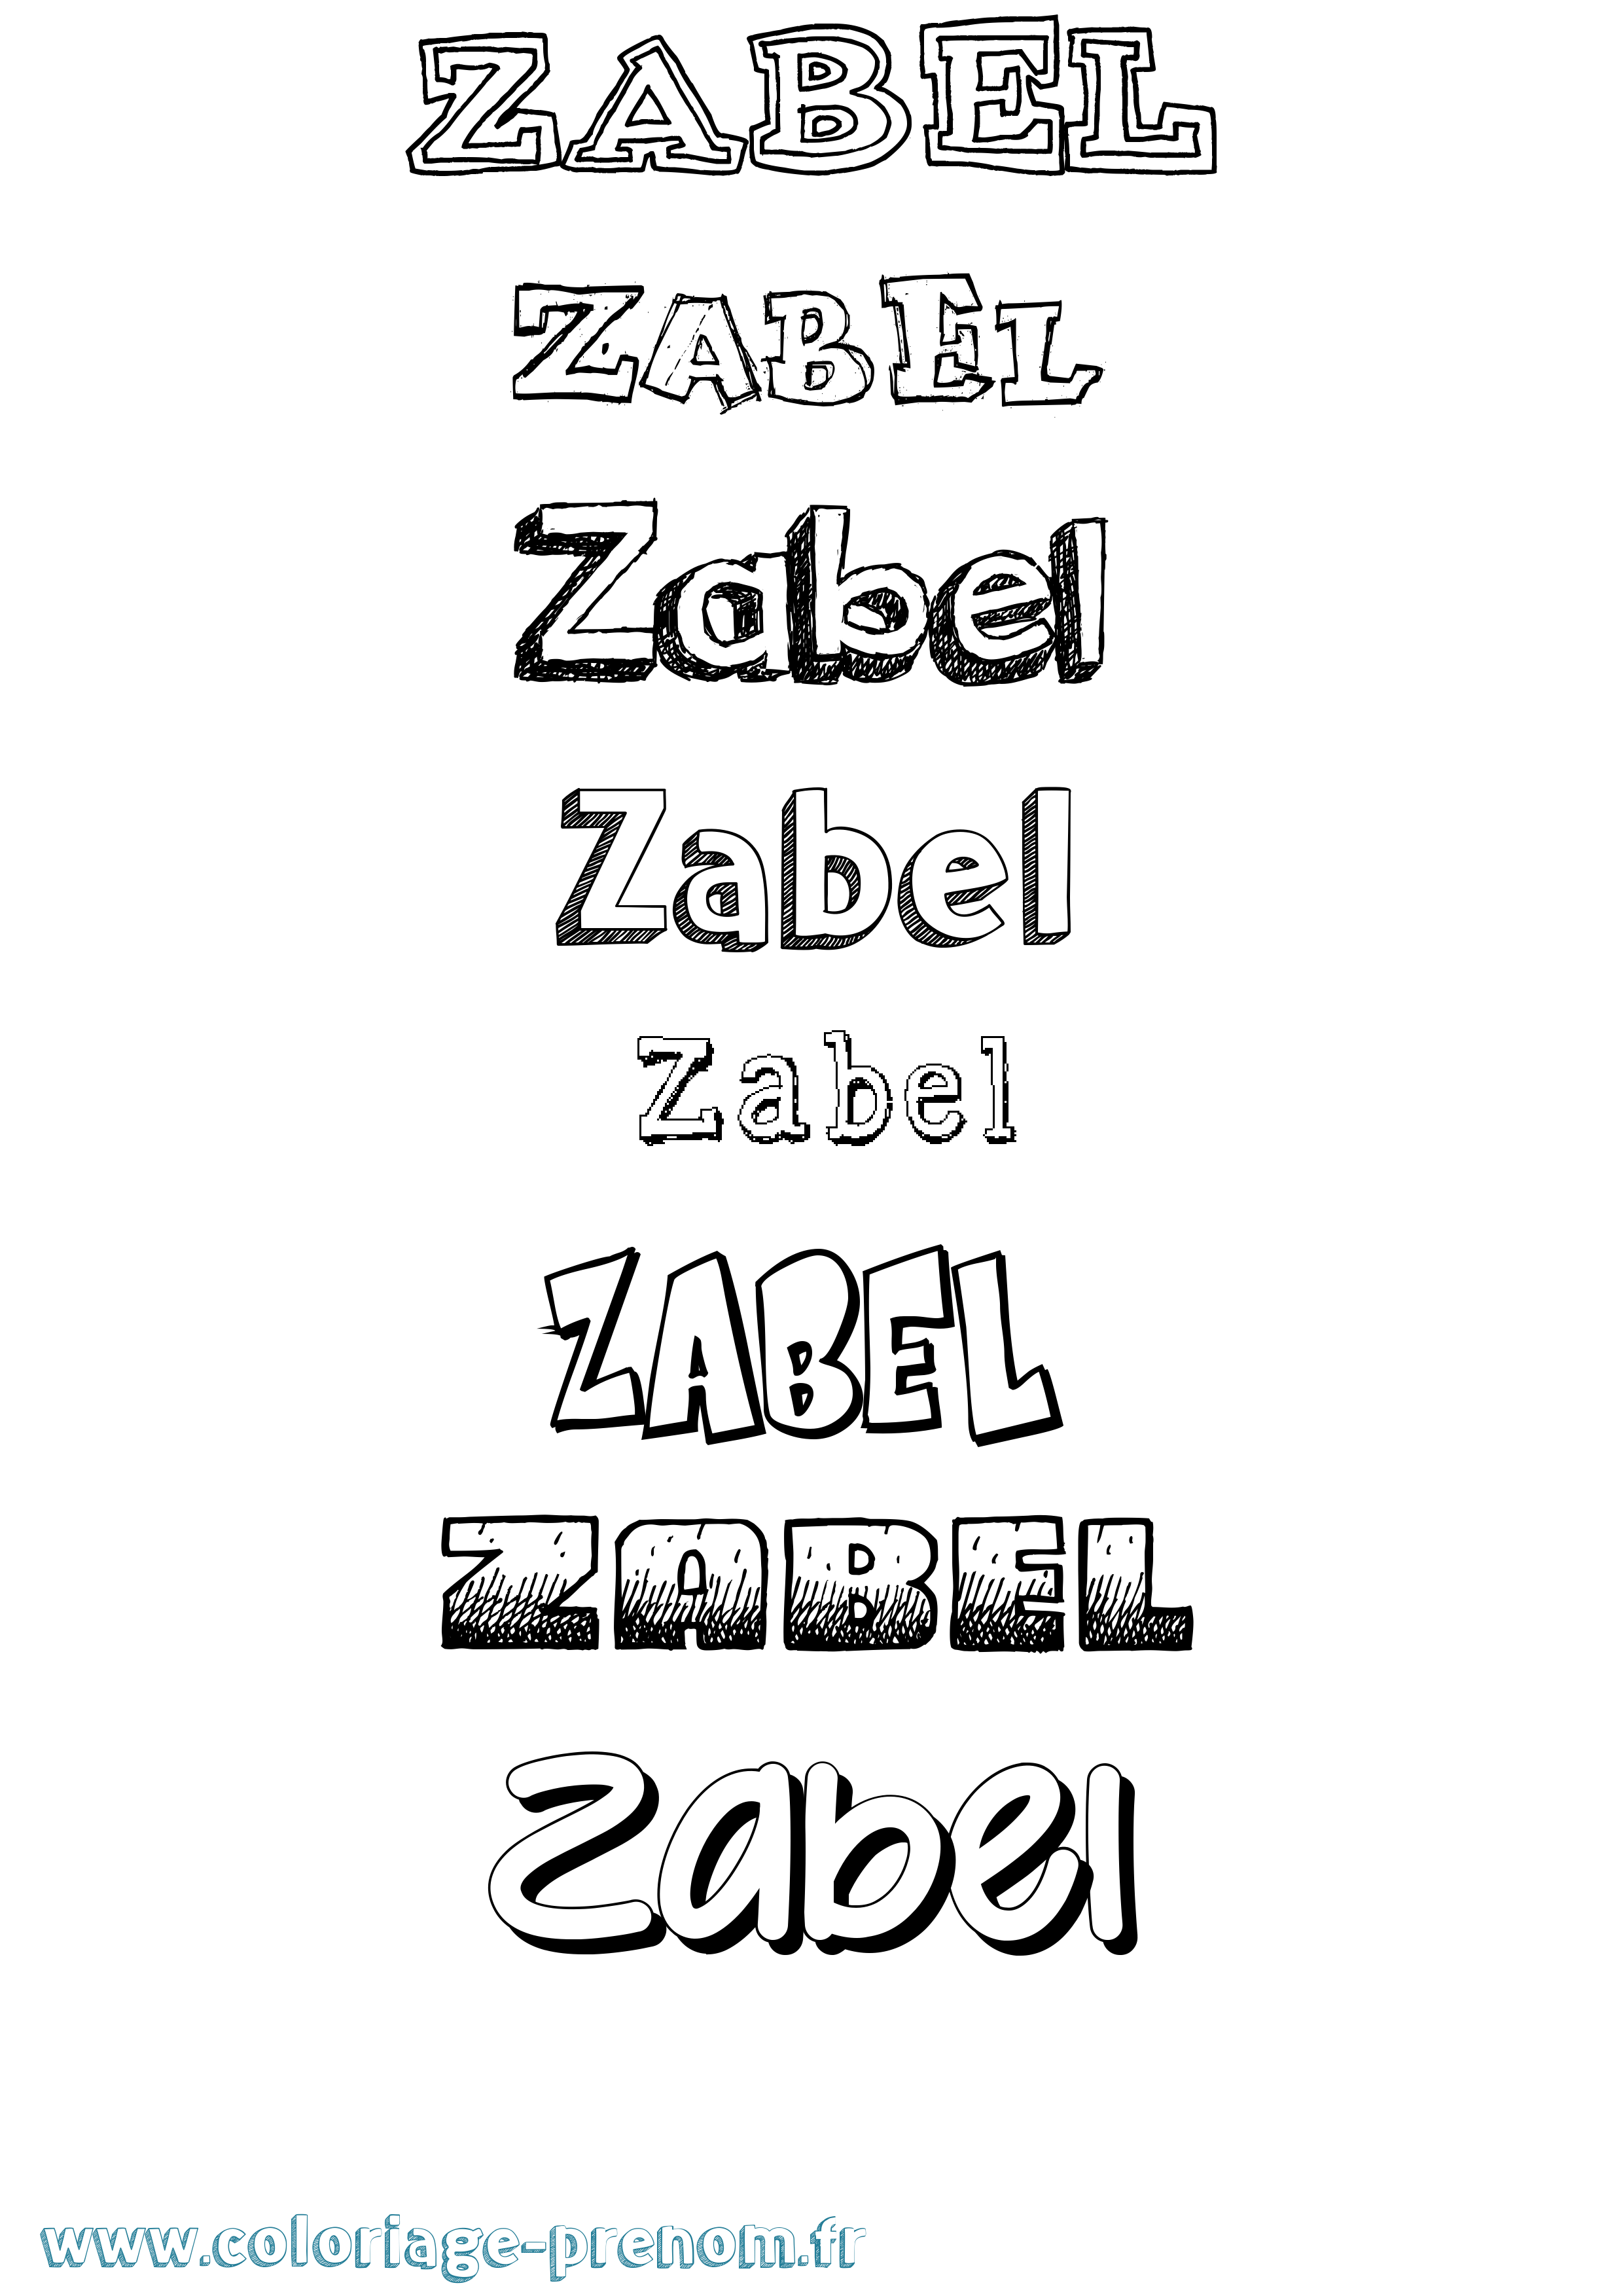 Coloriage prénom Zabel Dessiné